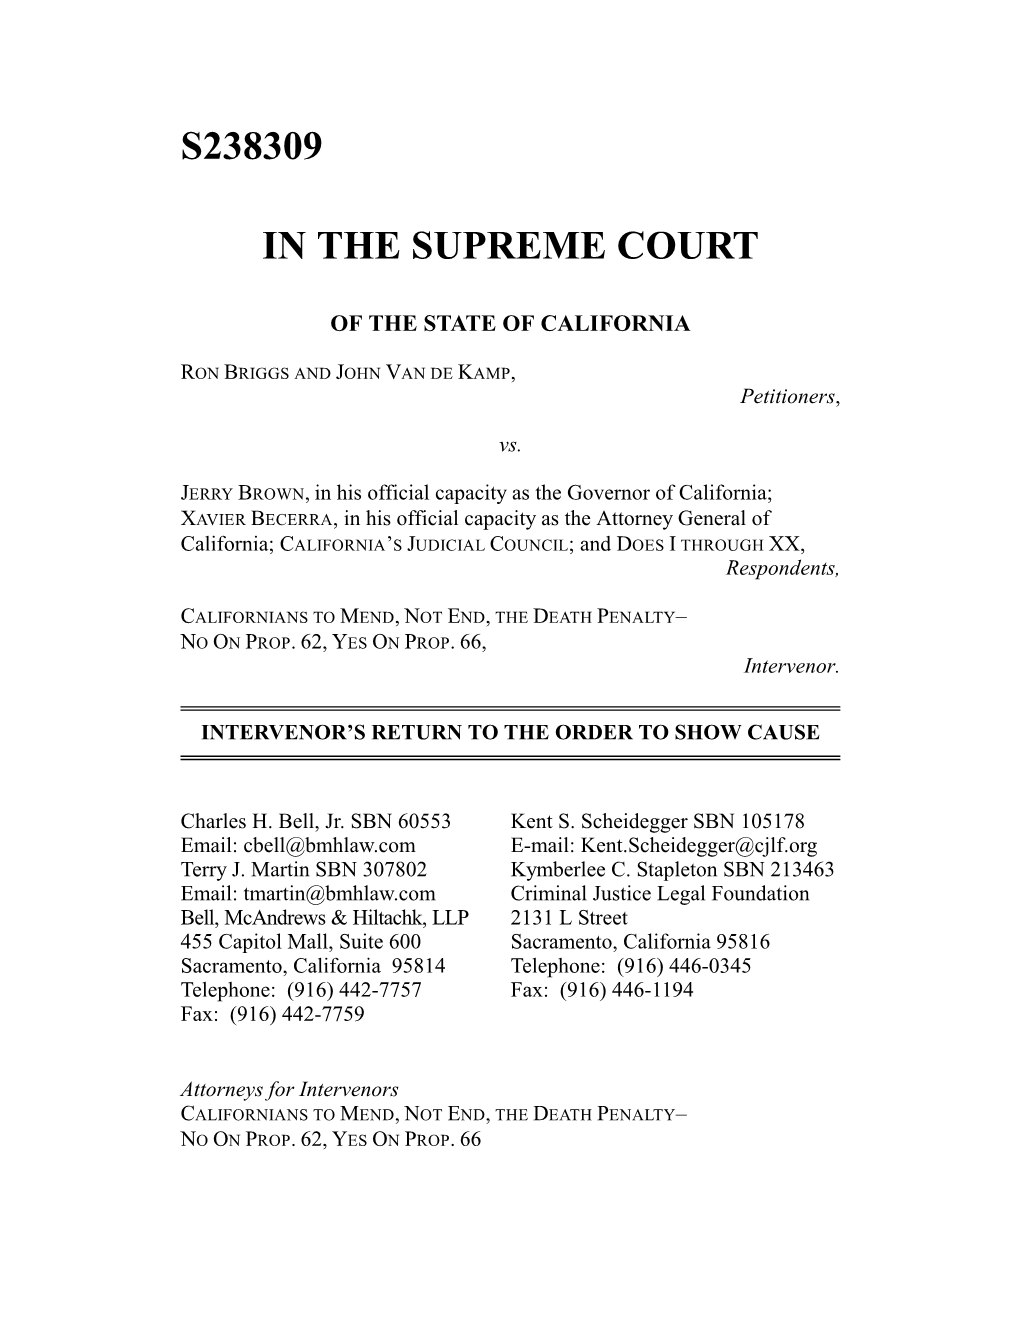 In the Supreme Court